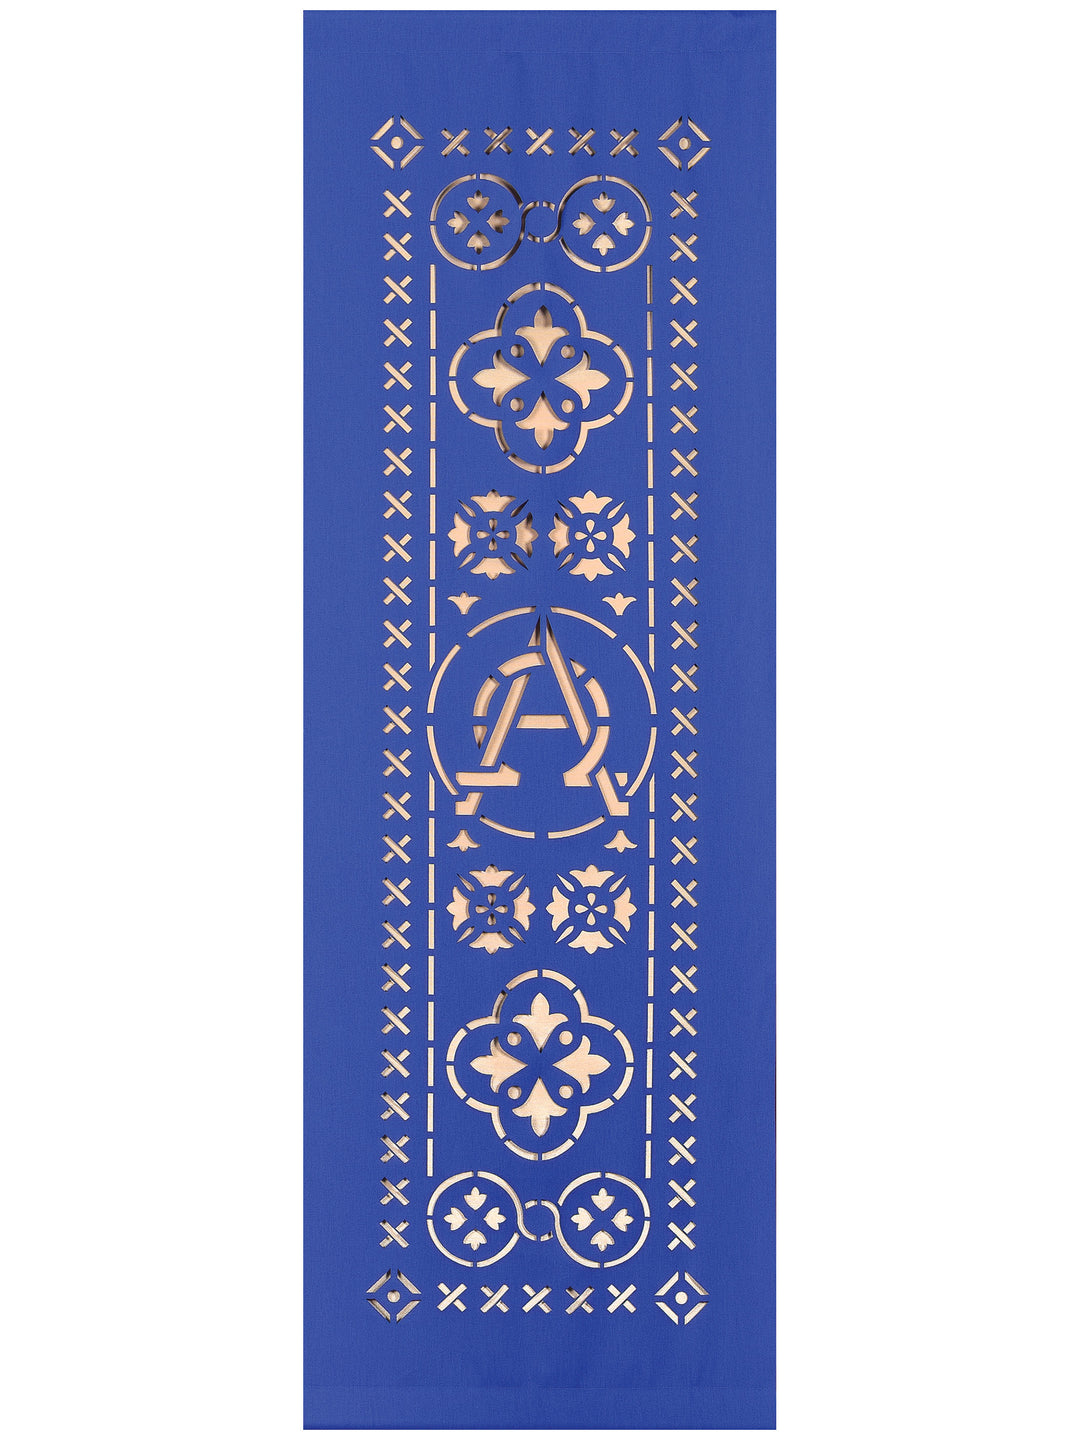 Ecclesiastical Alpha and Omega Banner - Liturgical Banners - PraiseBanners